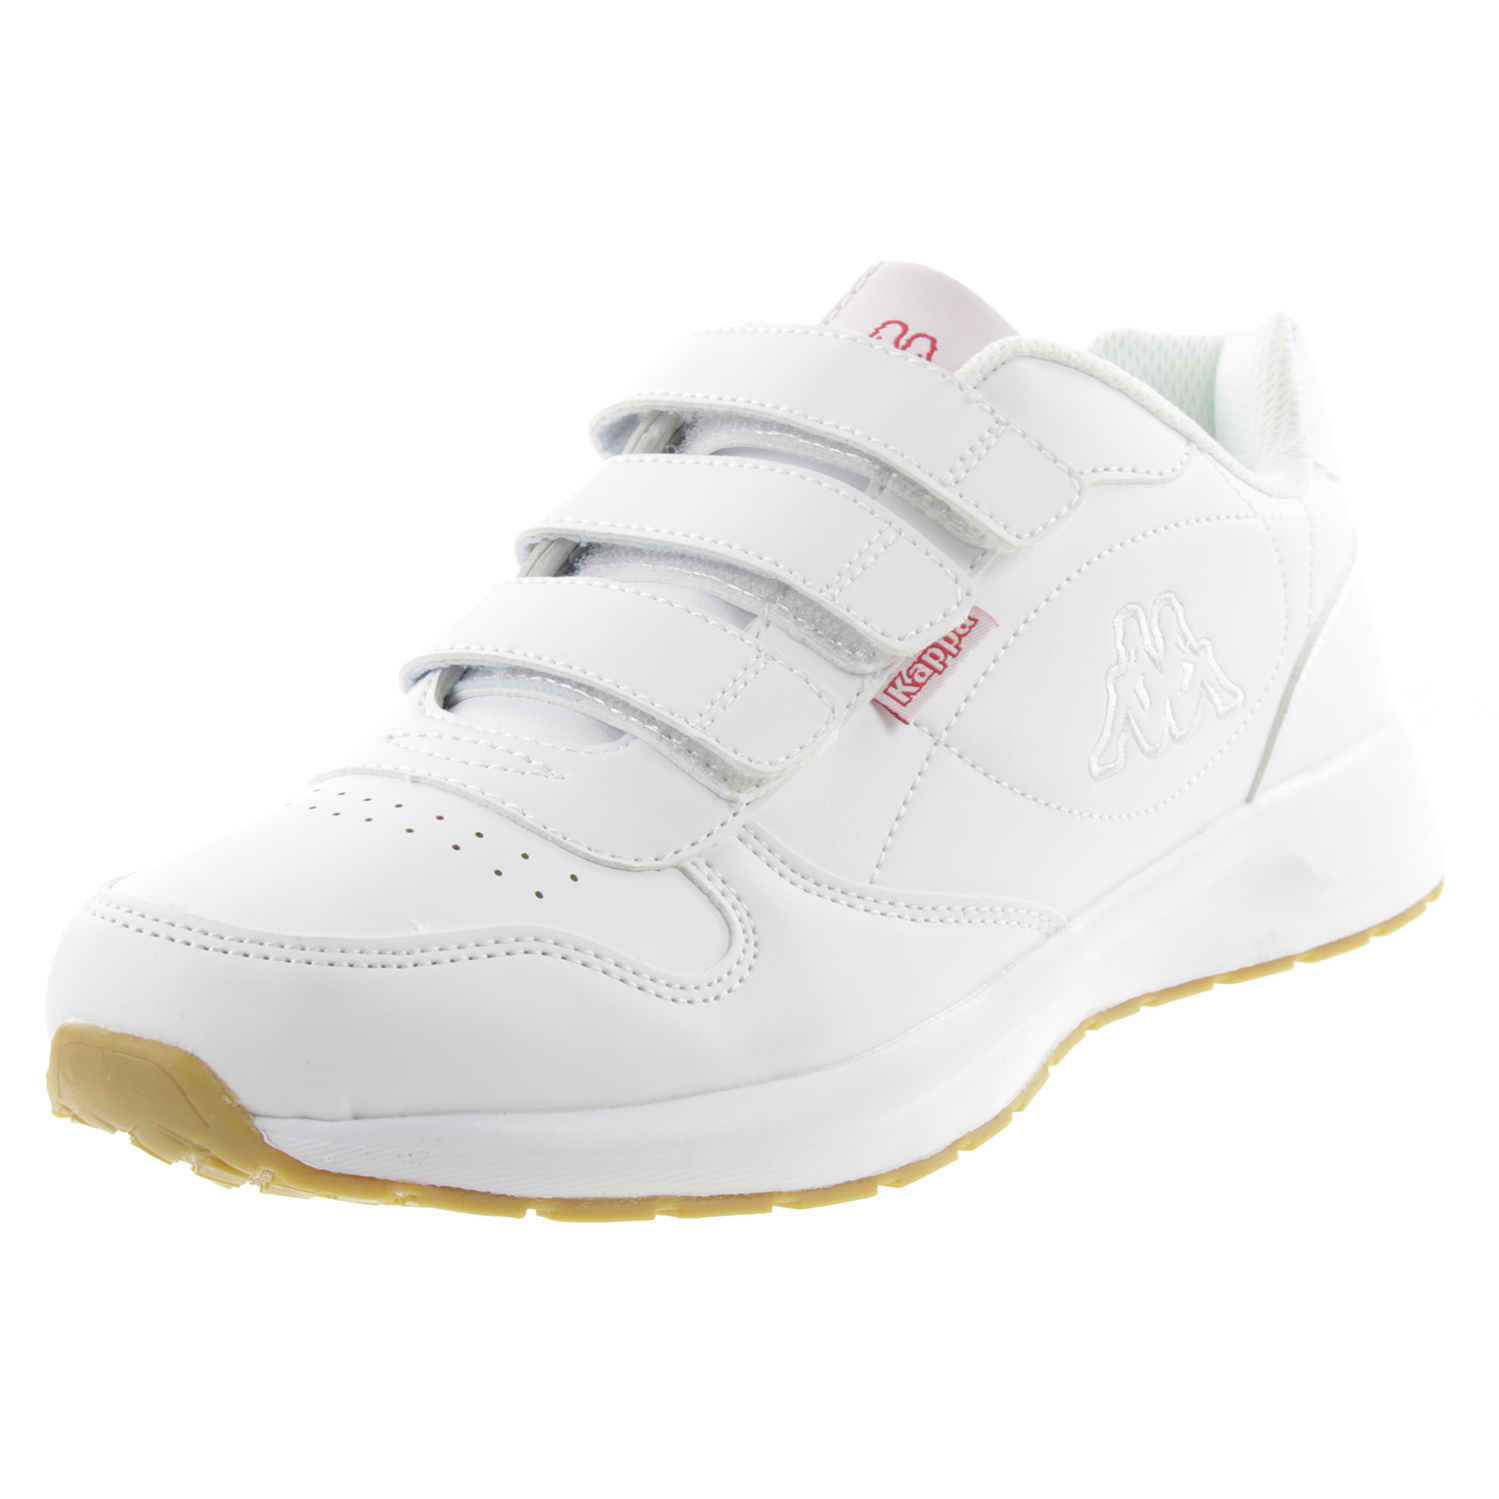 Kappa Unisex-Erwachsene Base VL Sneaker, Weiß (White 1010), 41 EU